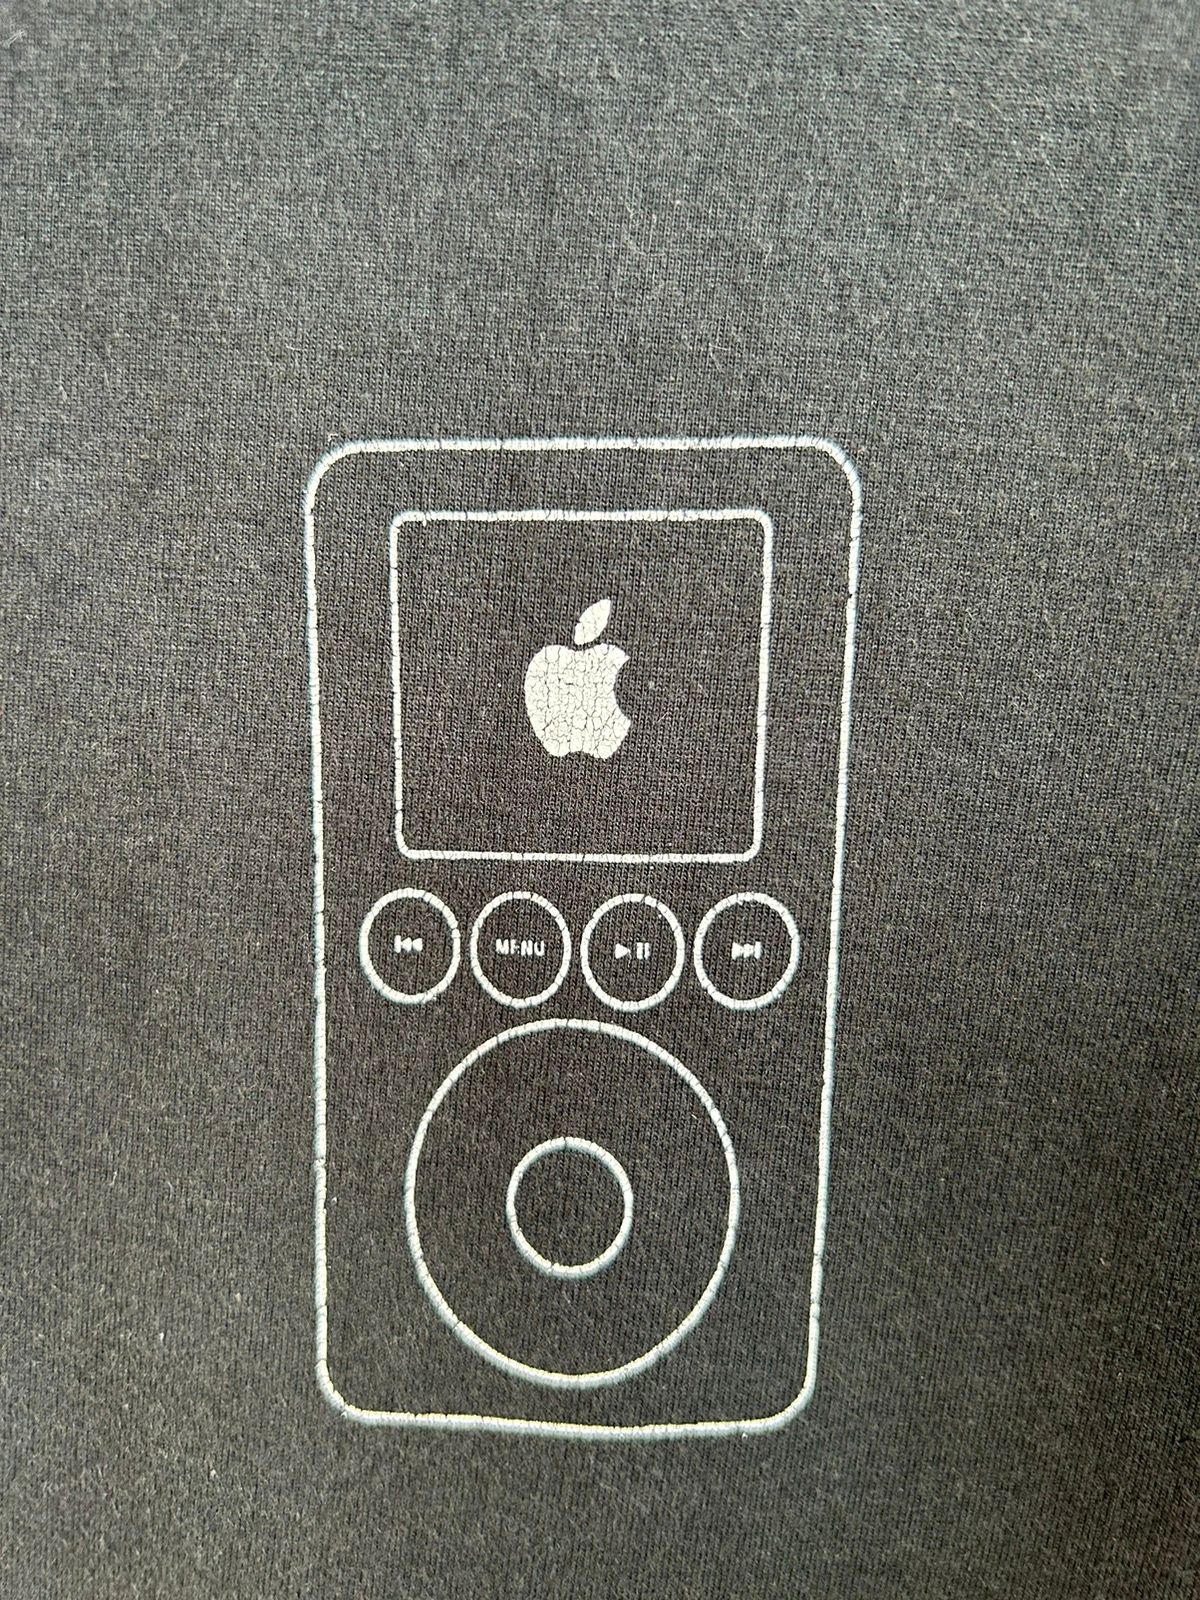 Vintage Apple iPod Live On Stage 4.28.03 Vintage Tshirt Size US S / EU 44-46 / 1 - 10 Preview